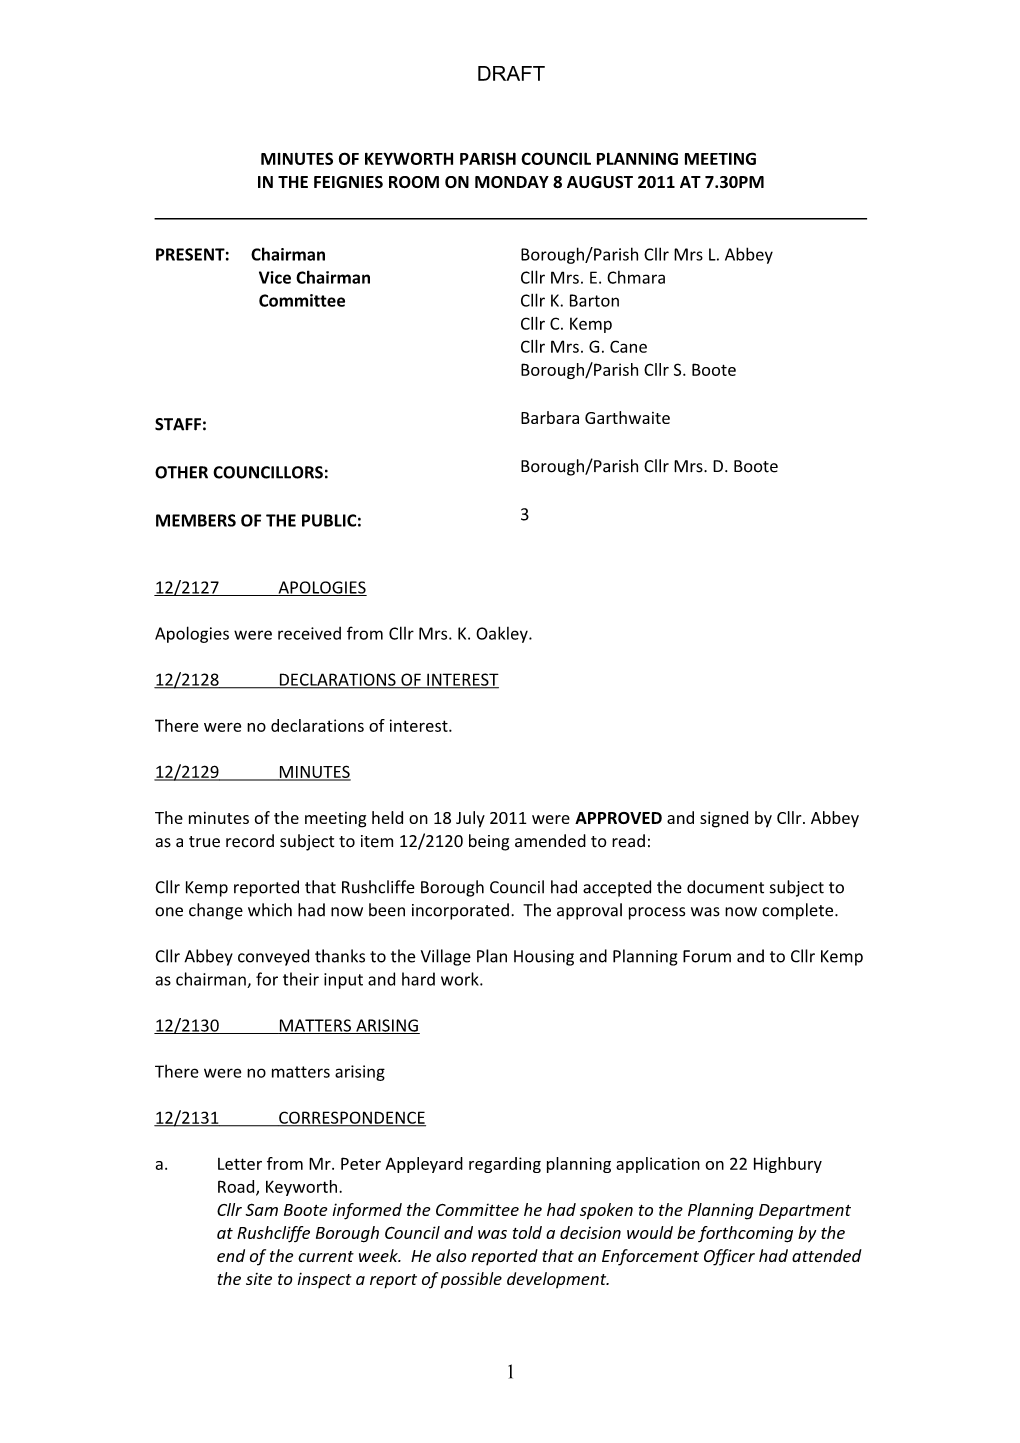 Minutes of Keyworth Parish Council Planning Meeting s1